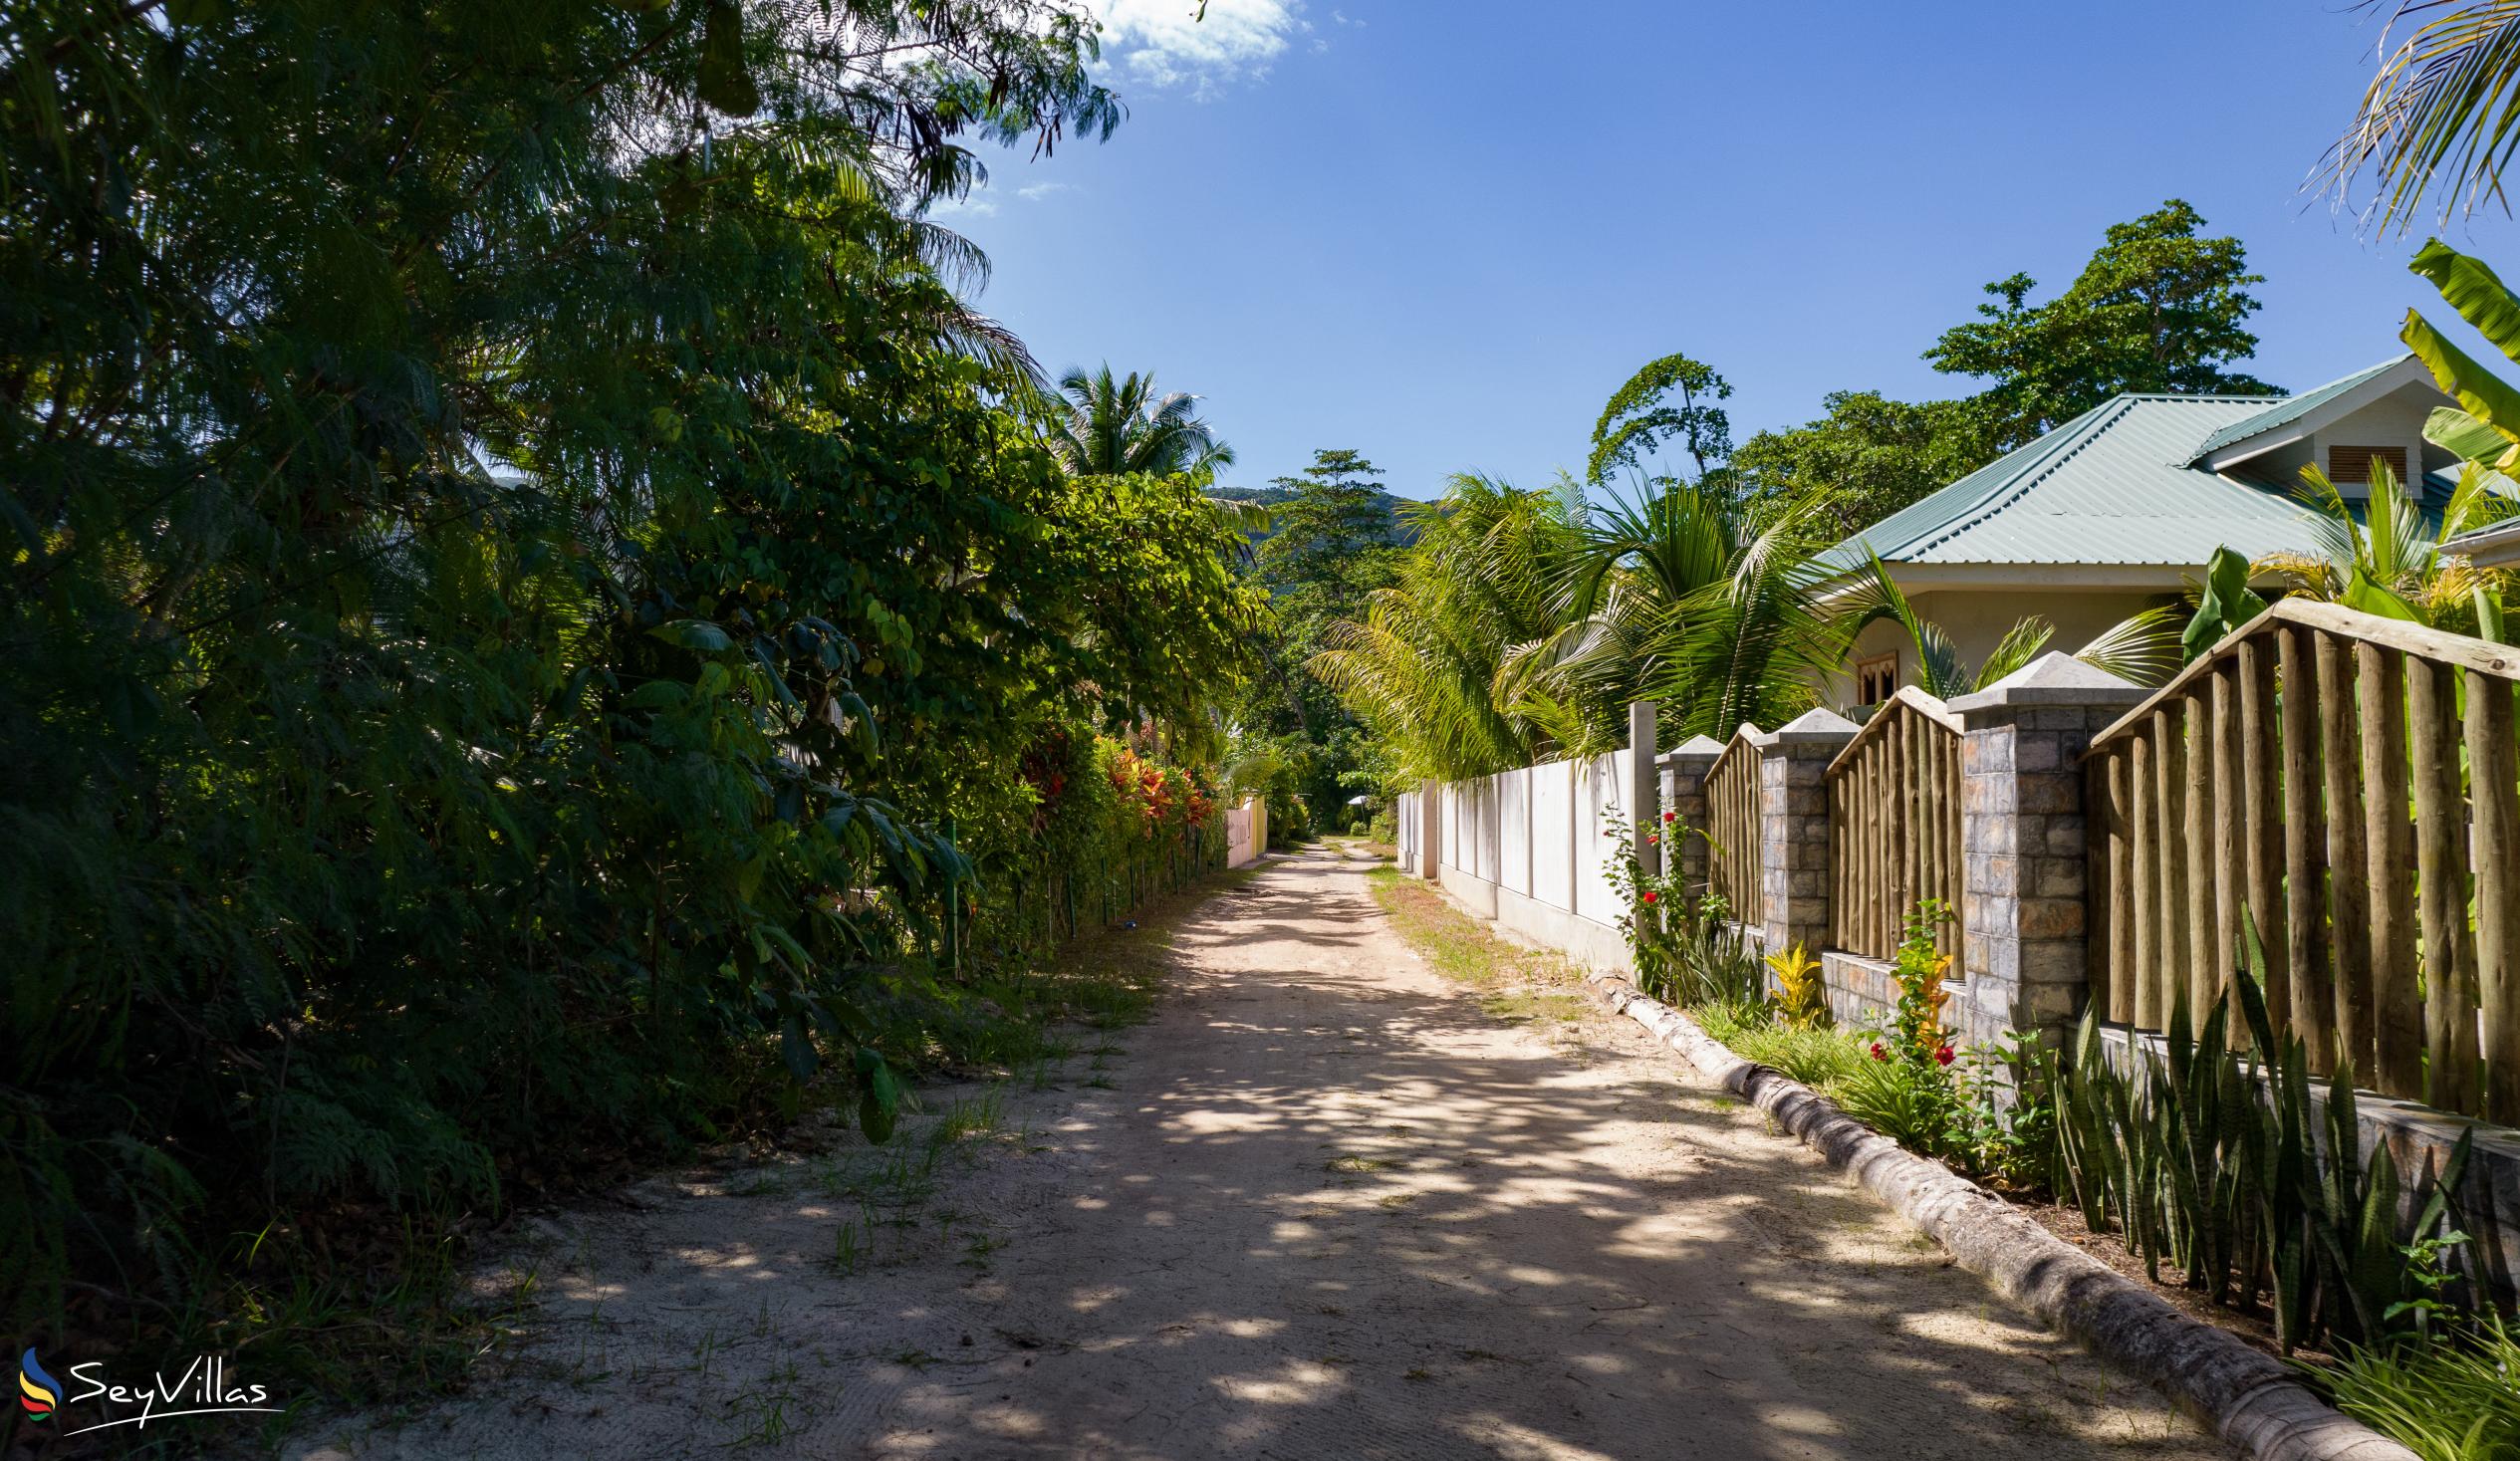 Foto 32: Coco de Mahi - Posizione - La Digue (Seychelles)